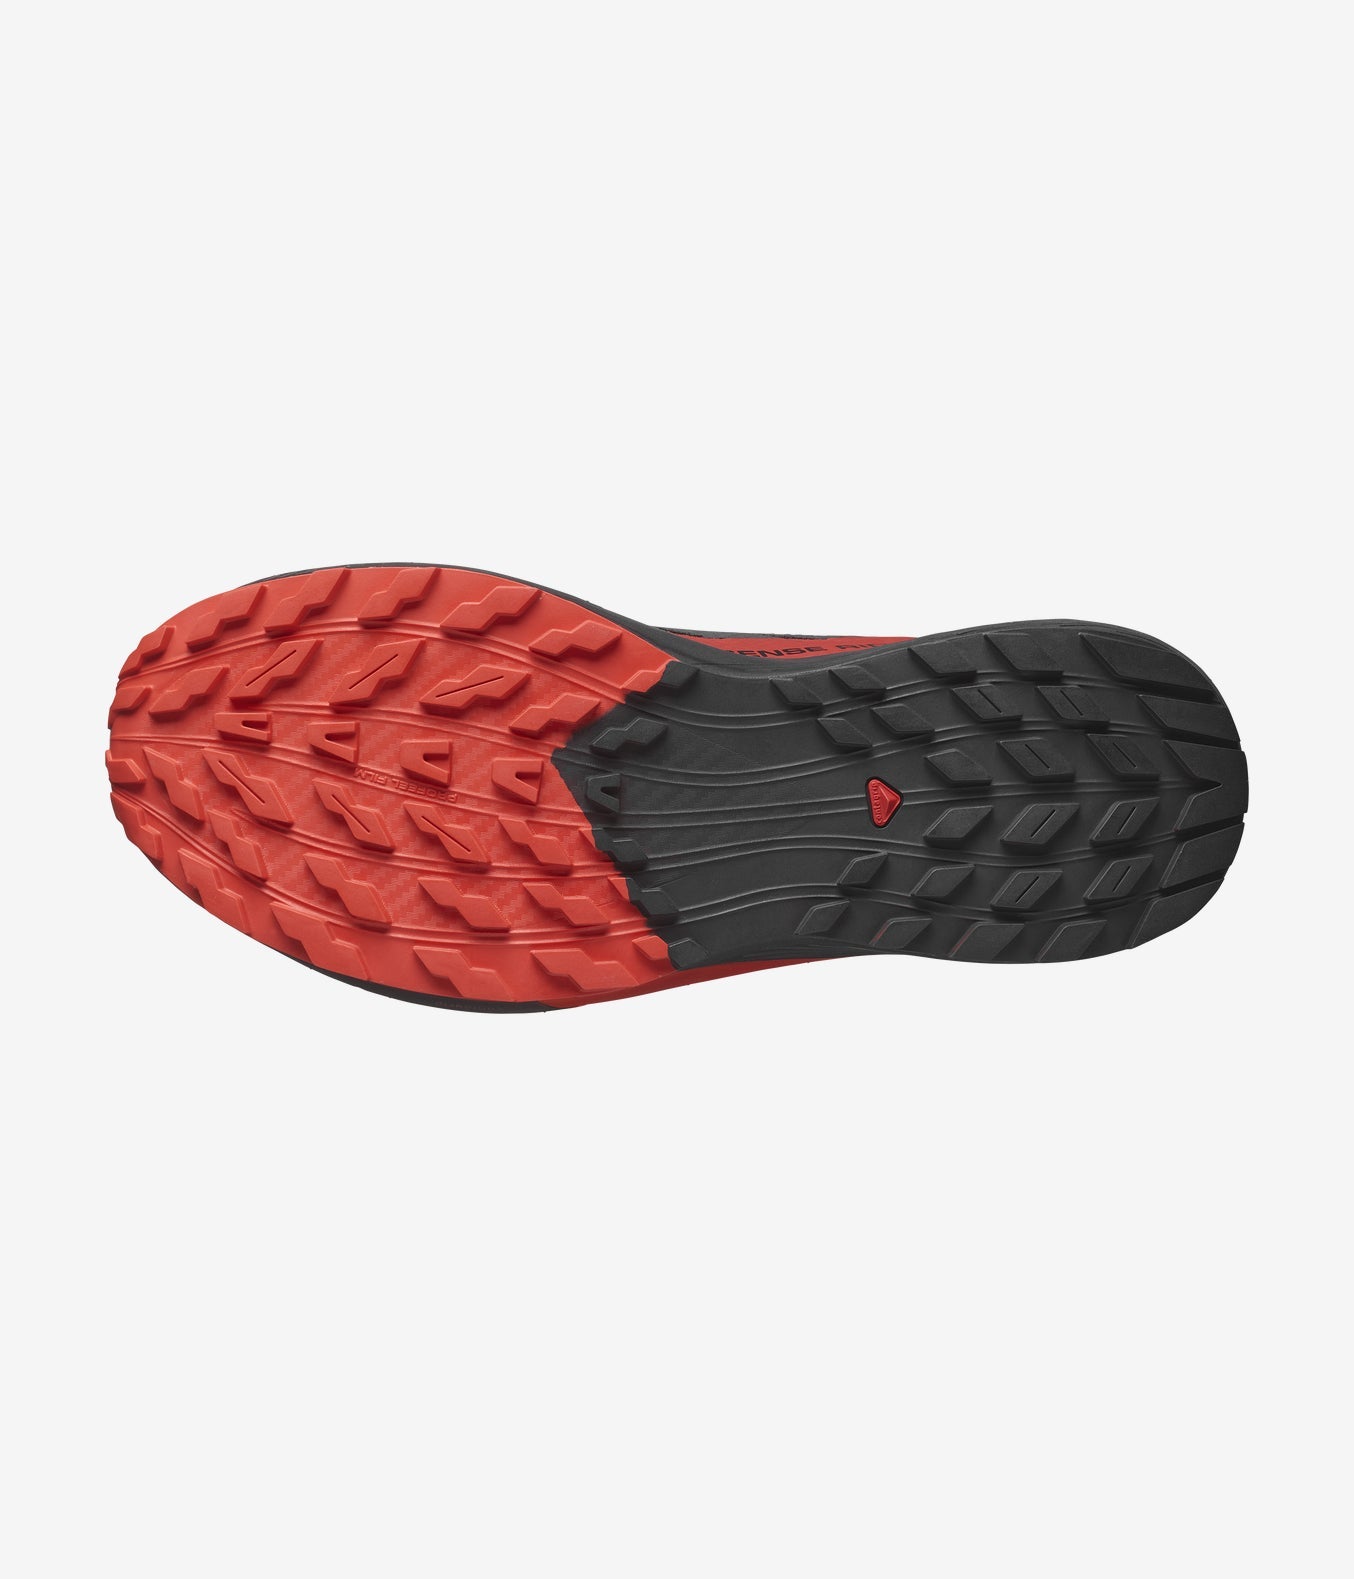 Salomon Men's Sense Ride 5 Trail Running Shoes,Black/Red